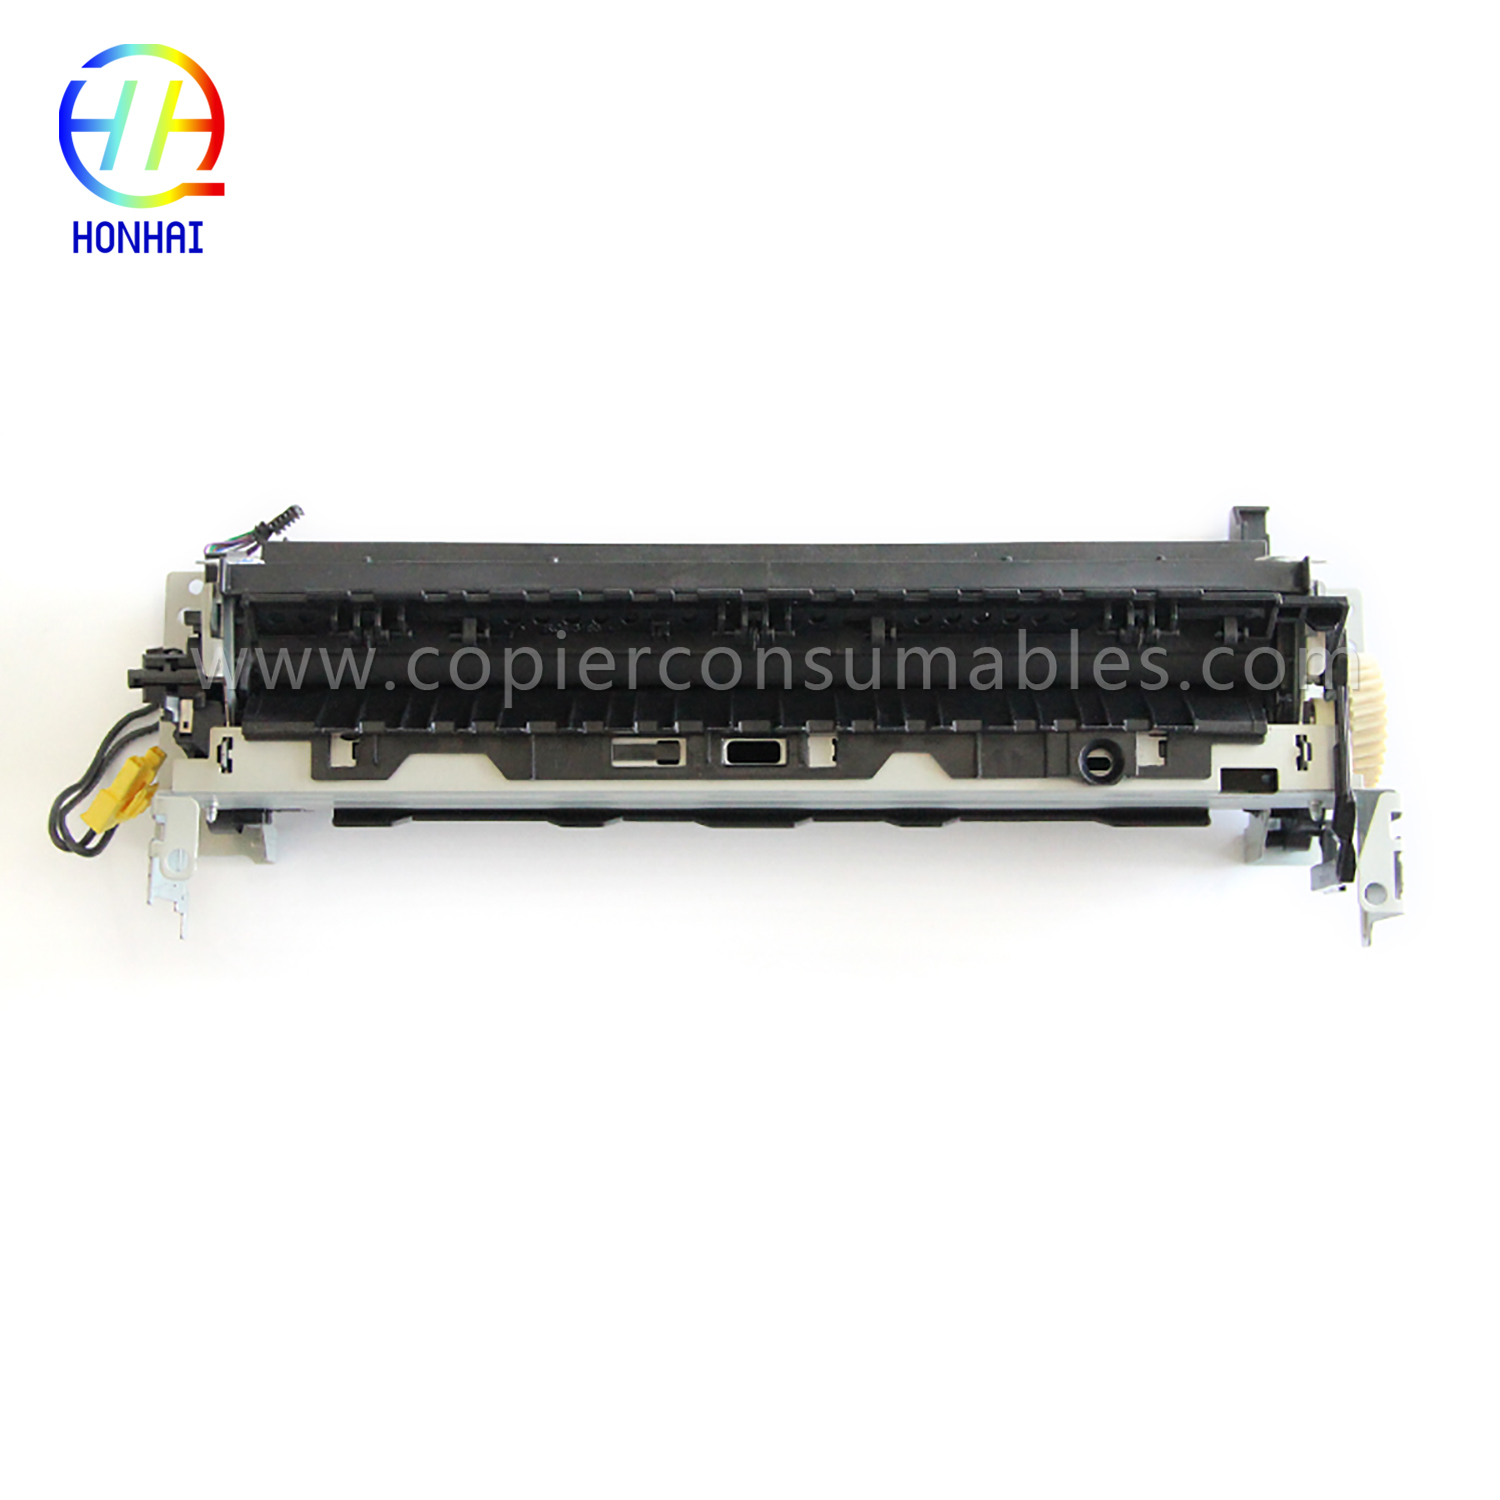 Jedinica grijača za HP Laserjet PRO M402 M403 Mfp M426 M427 (220V RM2-5425-000) (2)